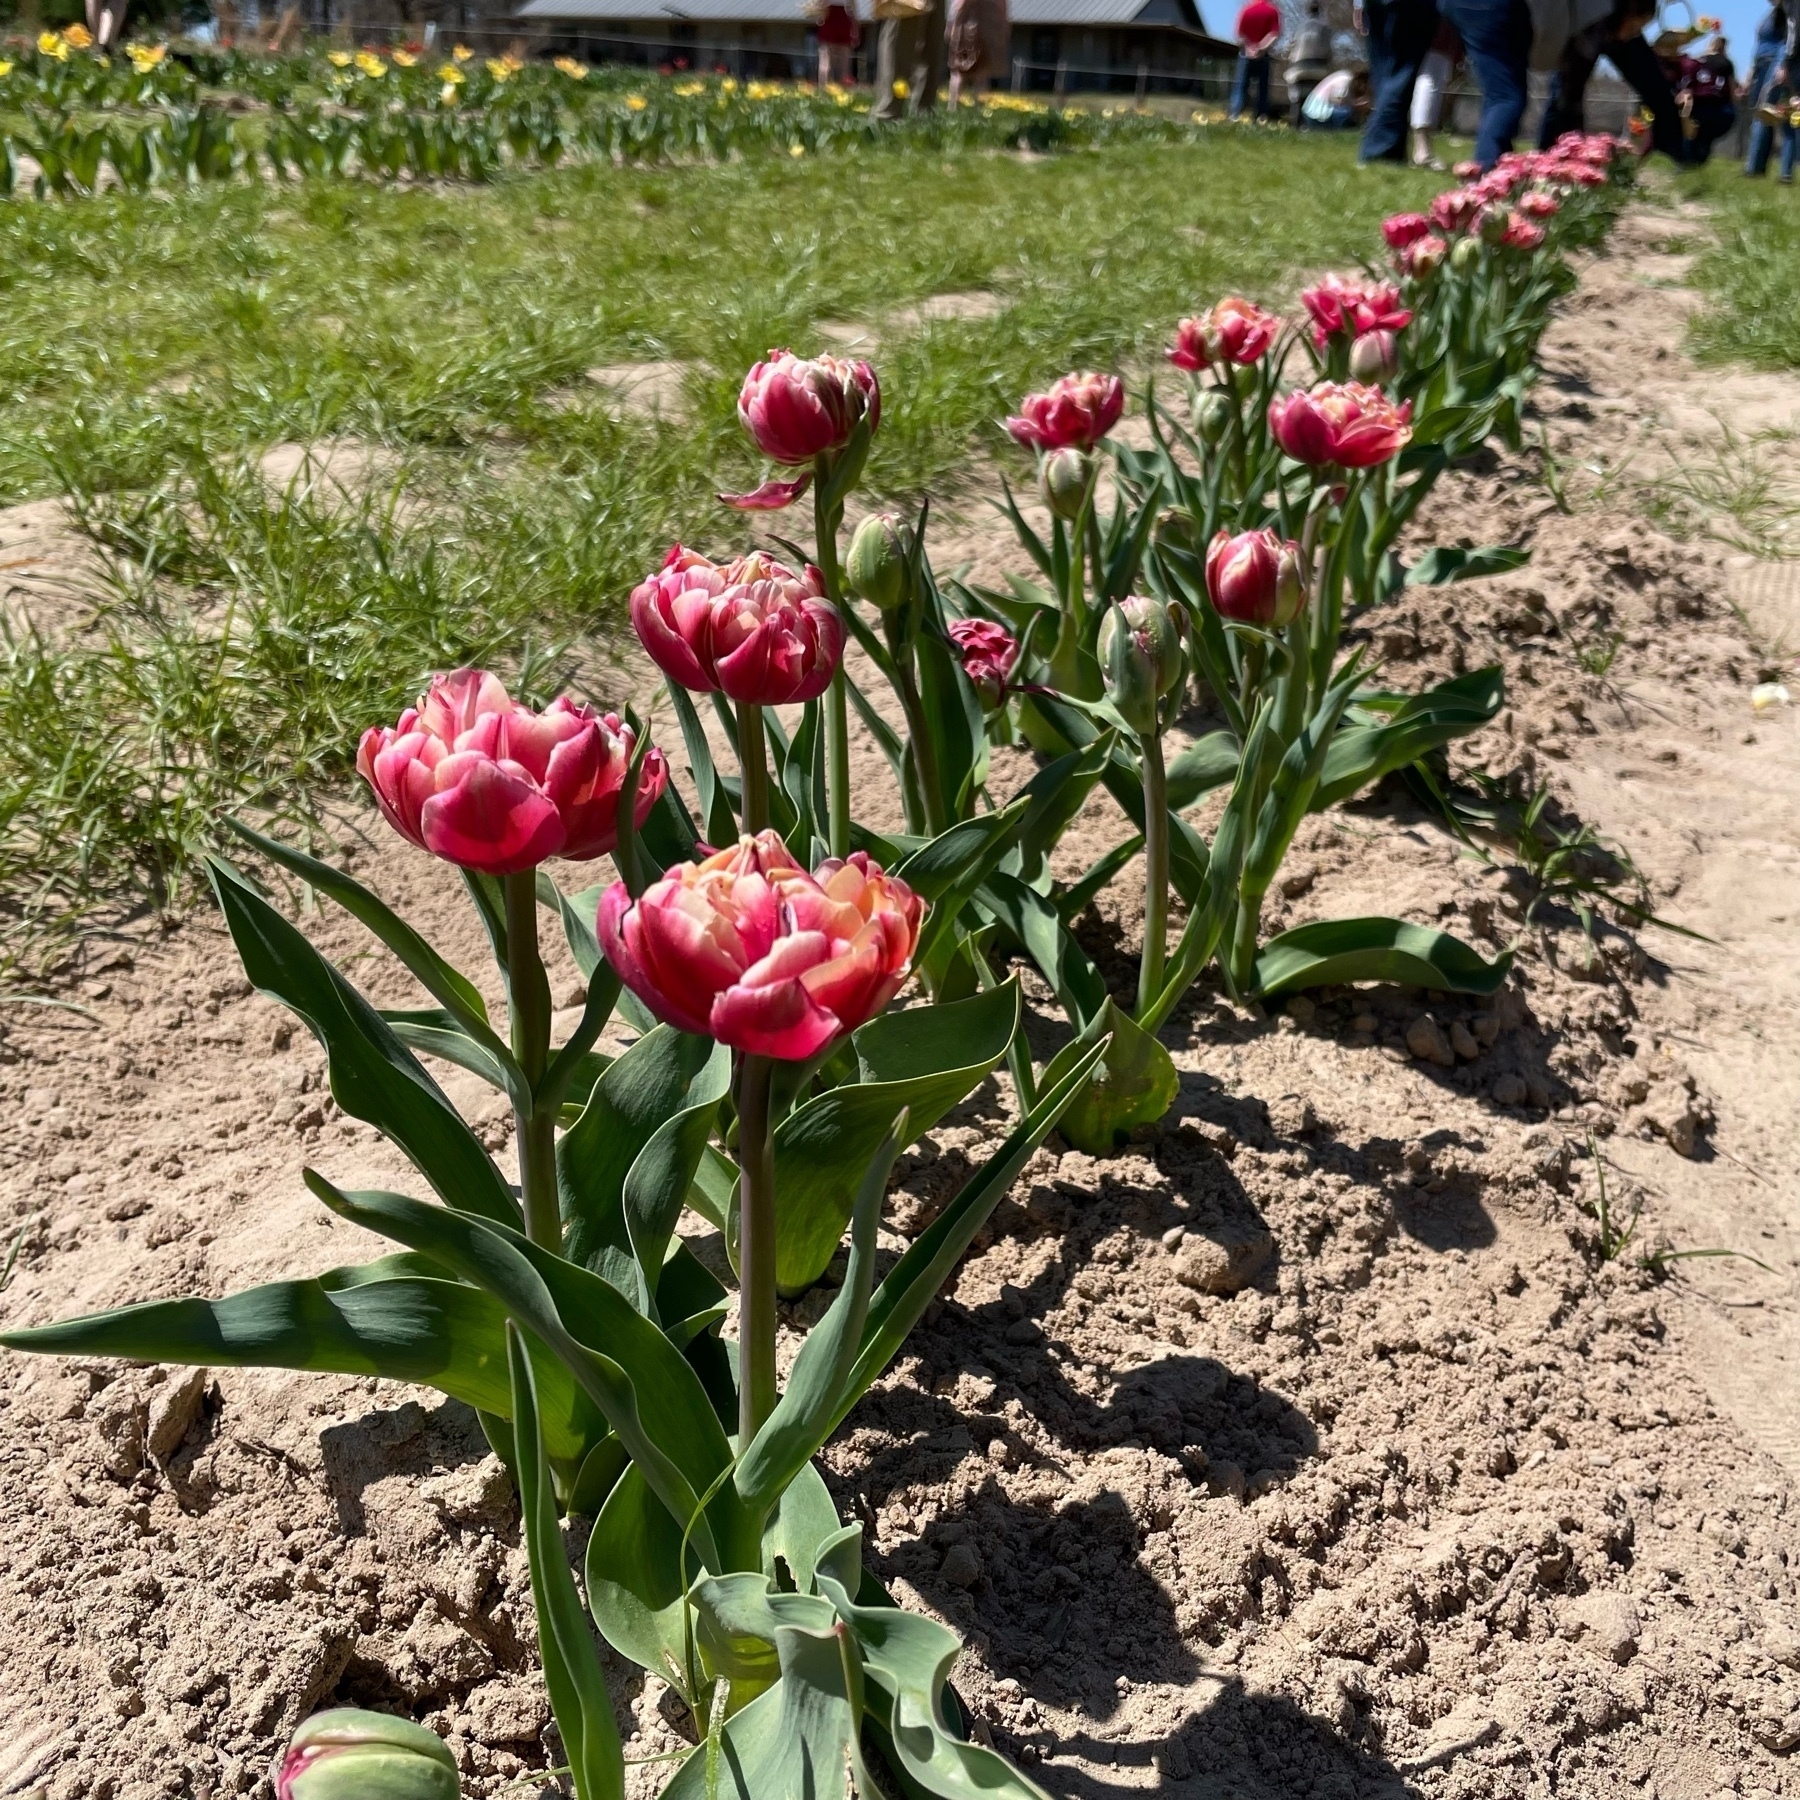 Row of tulips